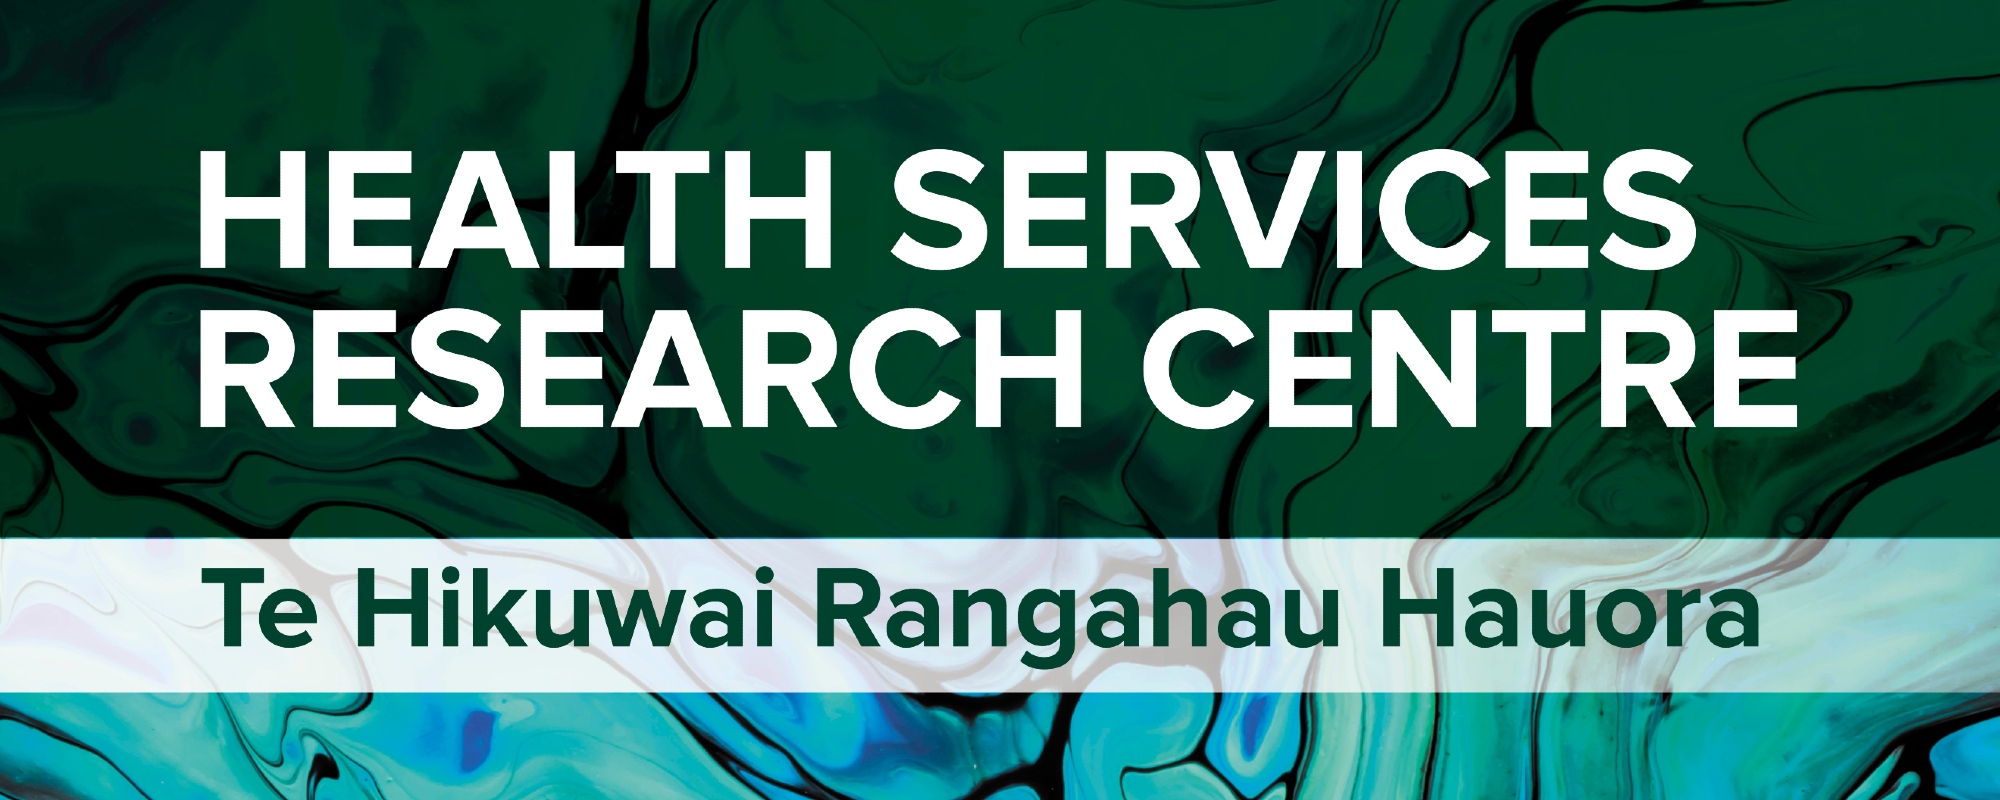 Health Services Research Centre logo